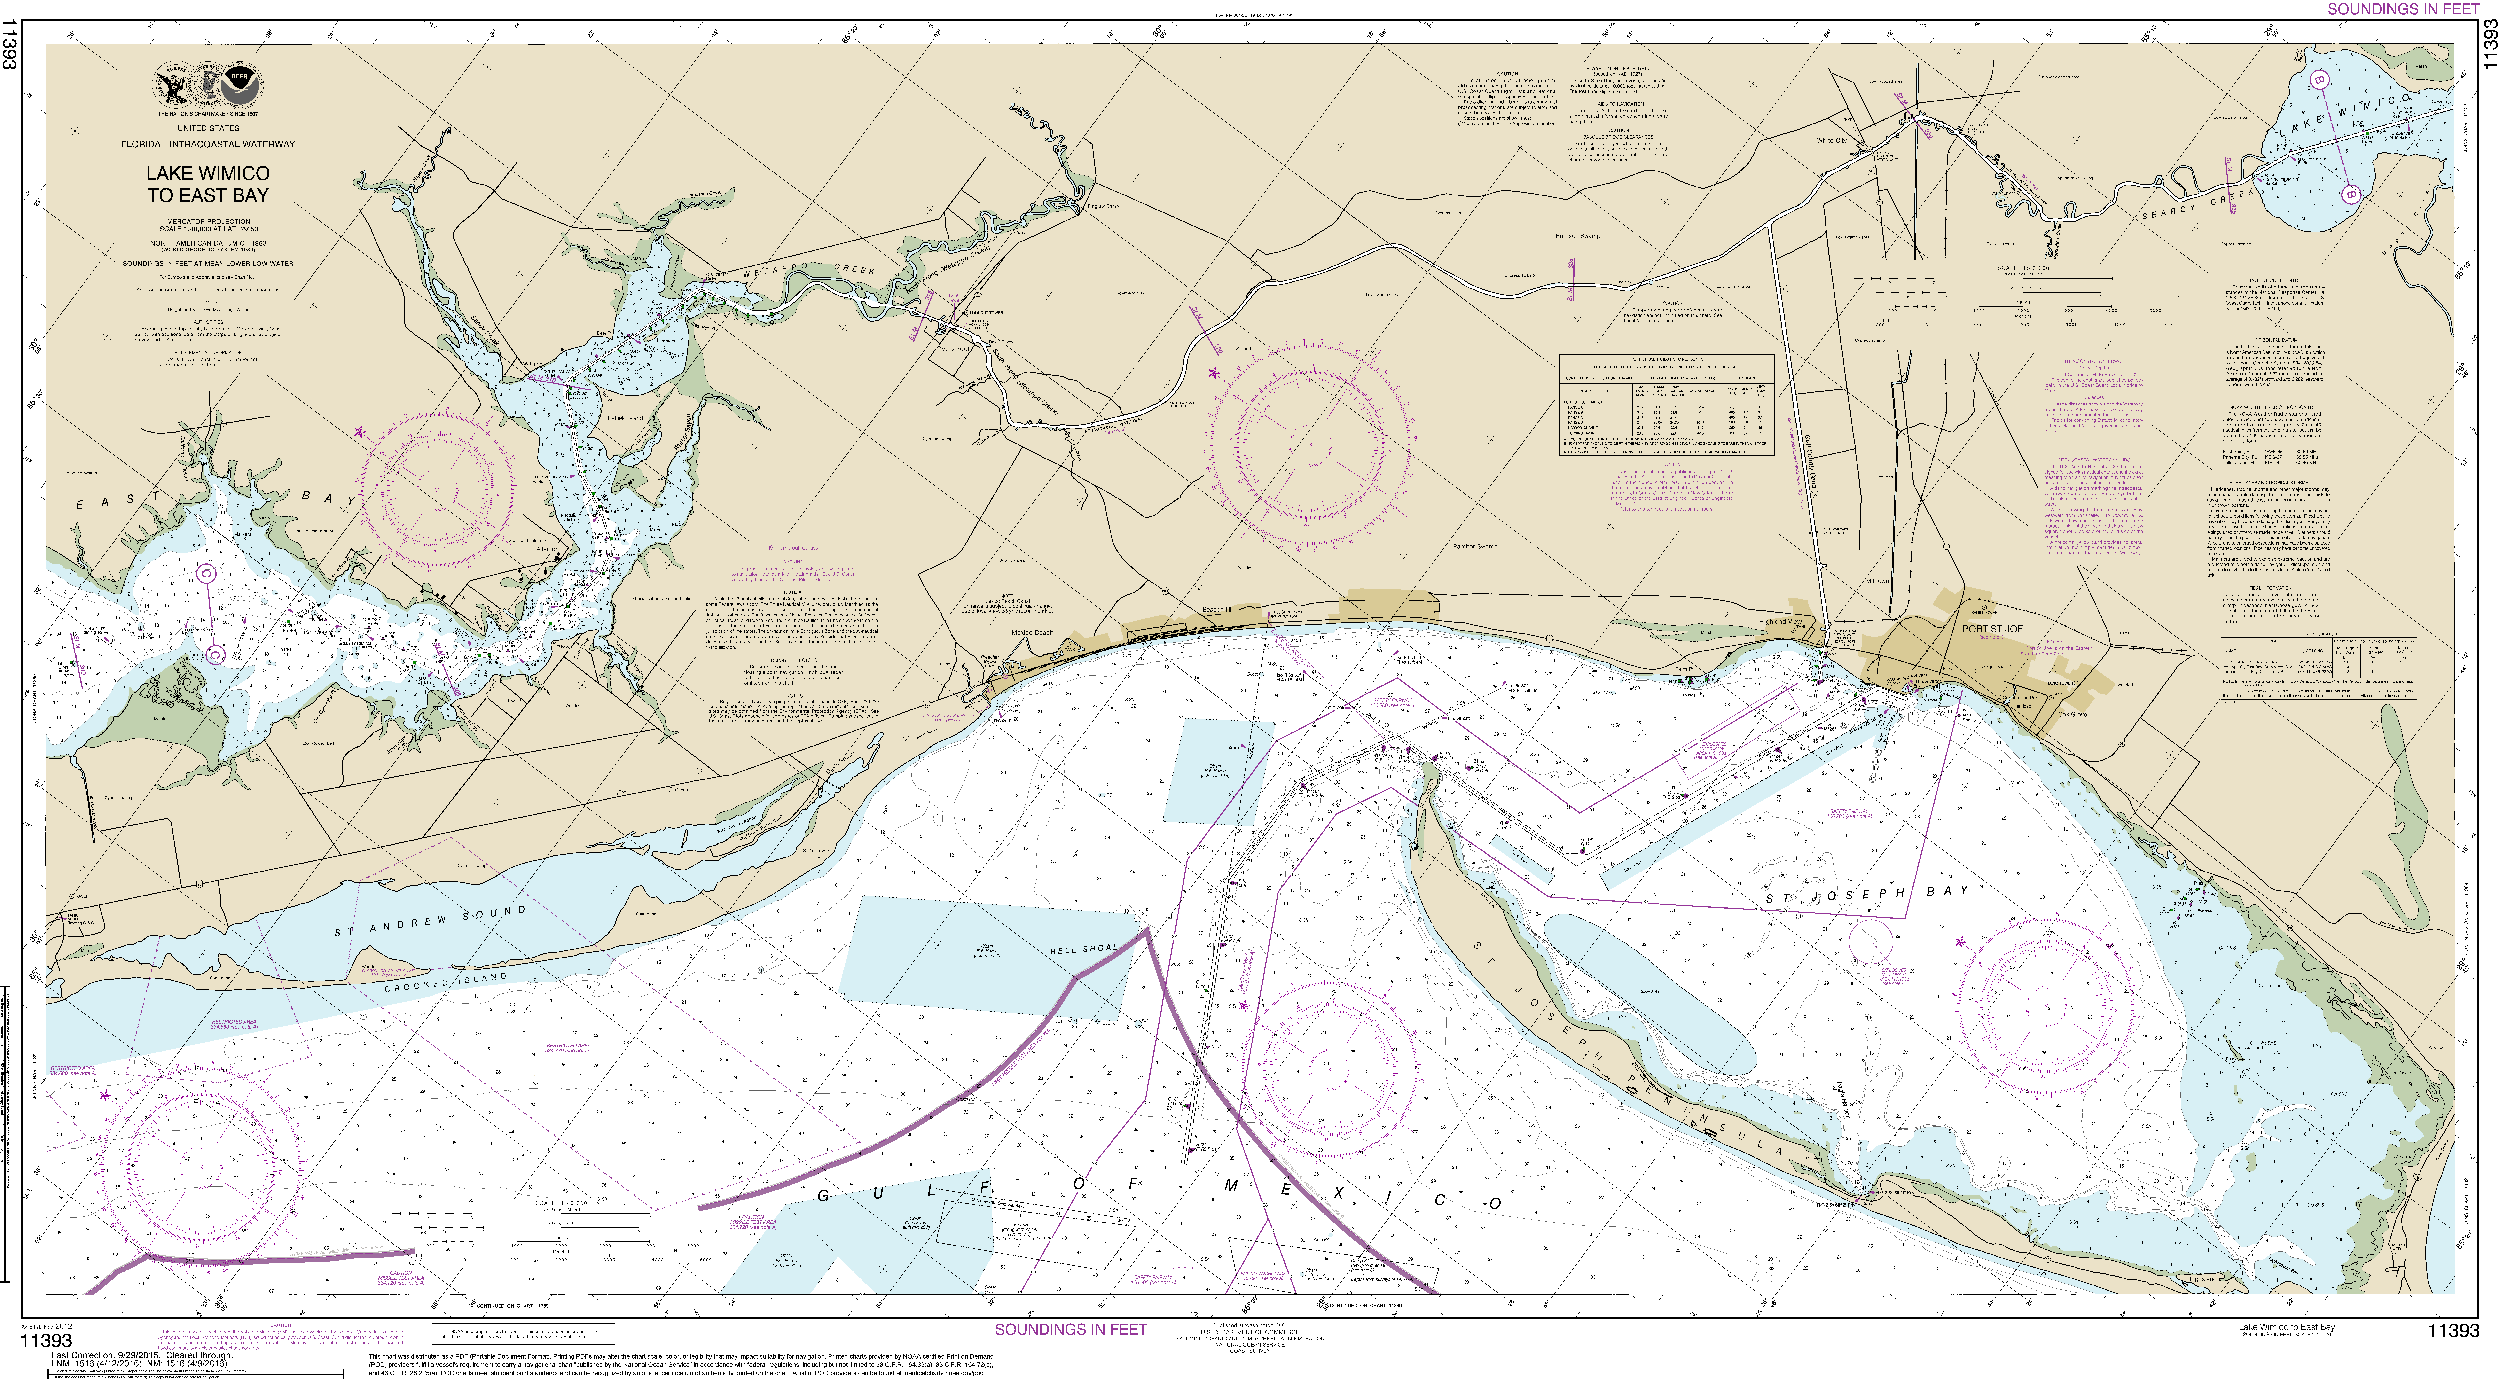 NOAA Nautical Chart 11393: Intracoastal Waterway Lake Wimico to East Bay